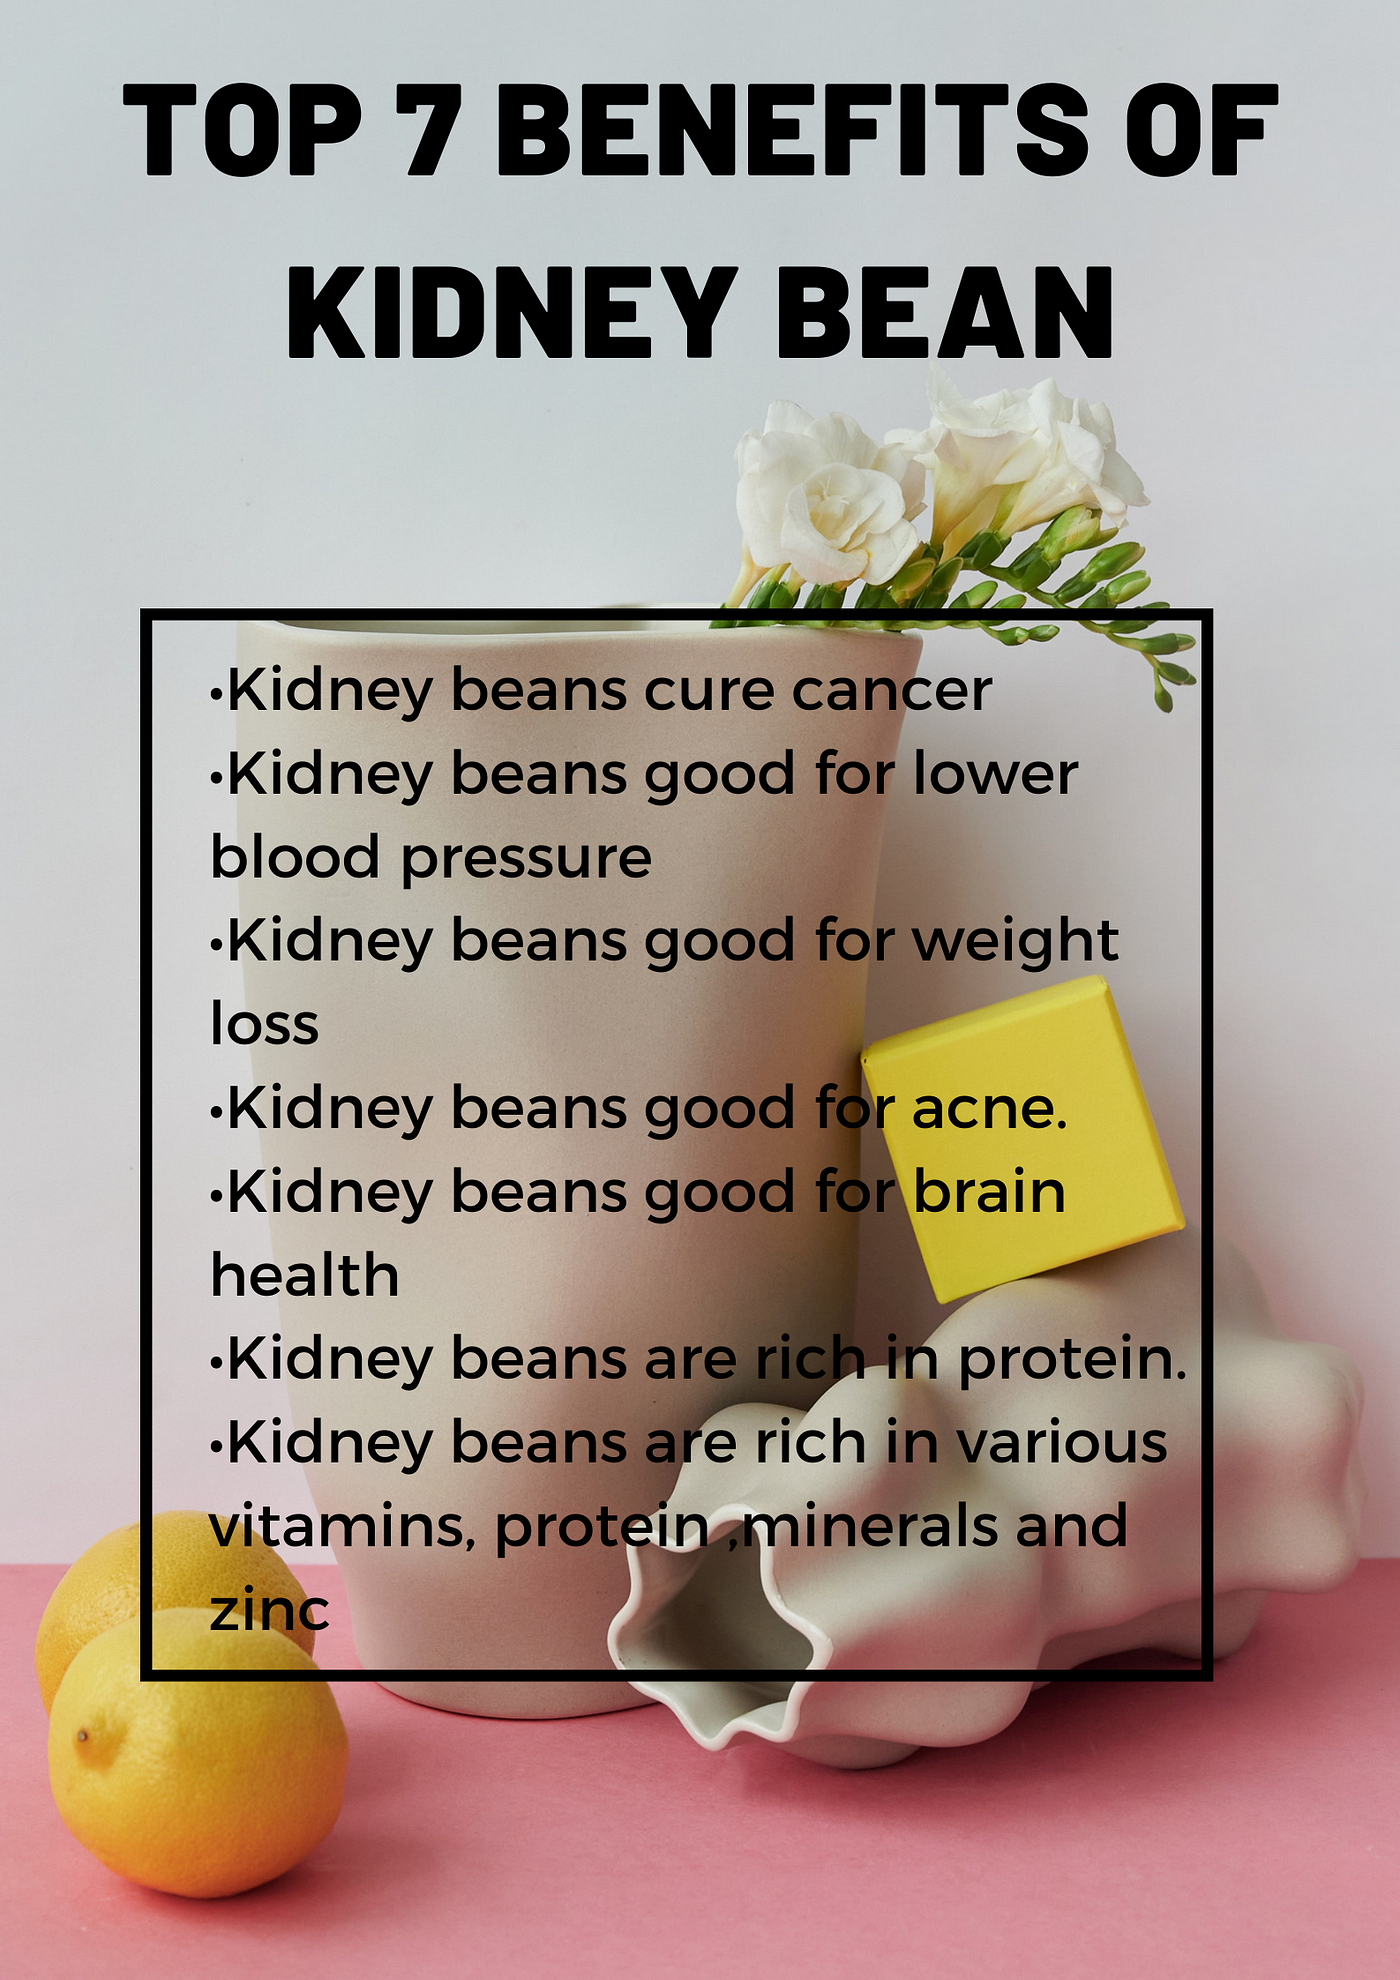 Health benefits of kidney beans